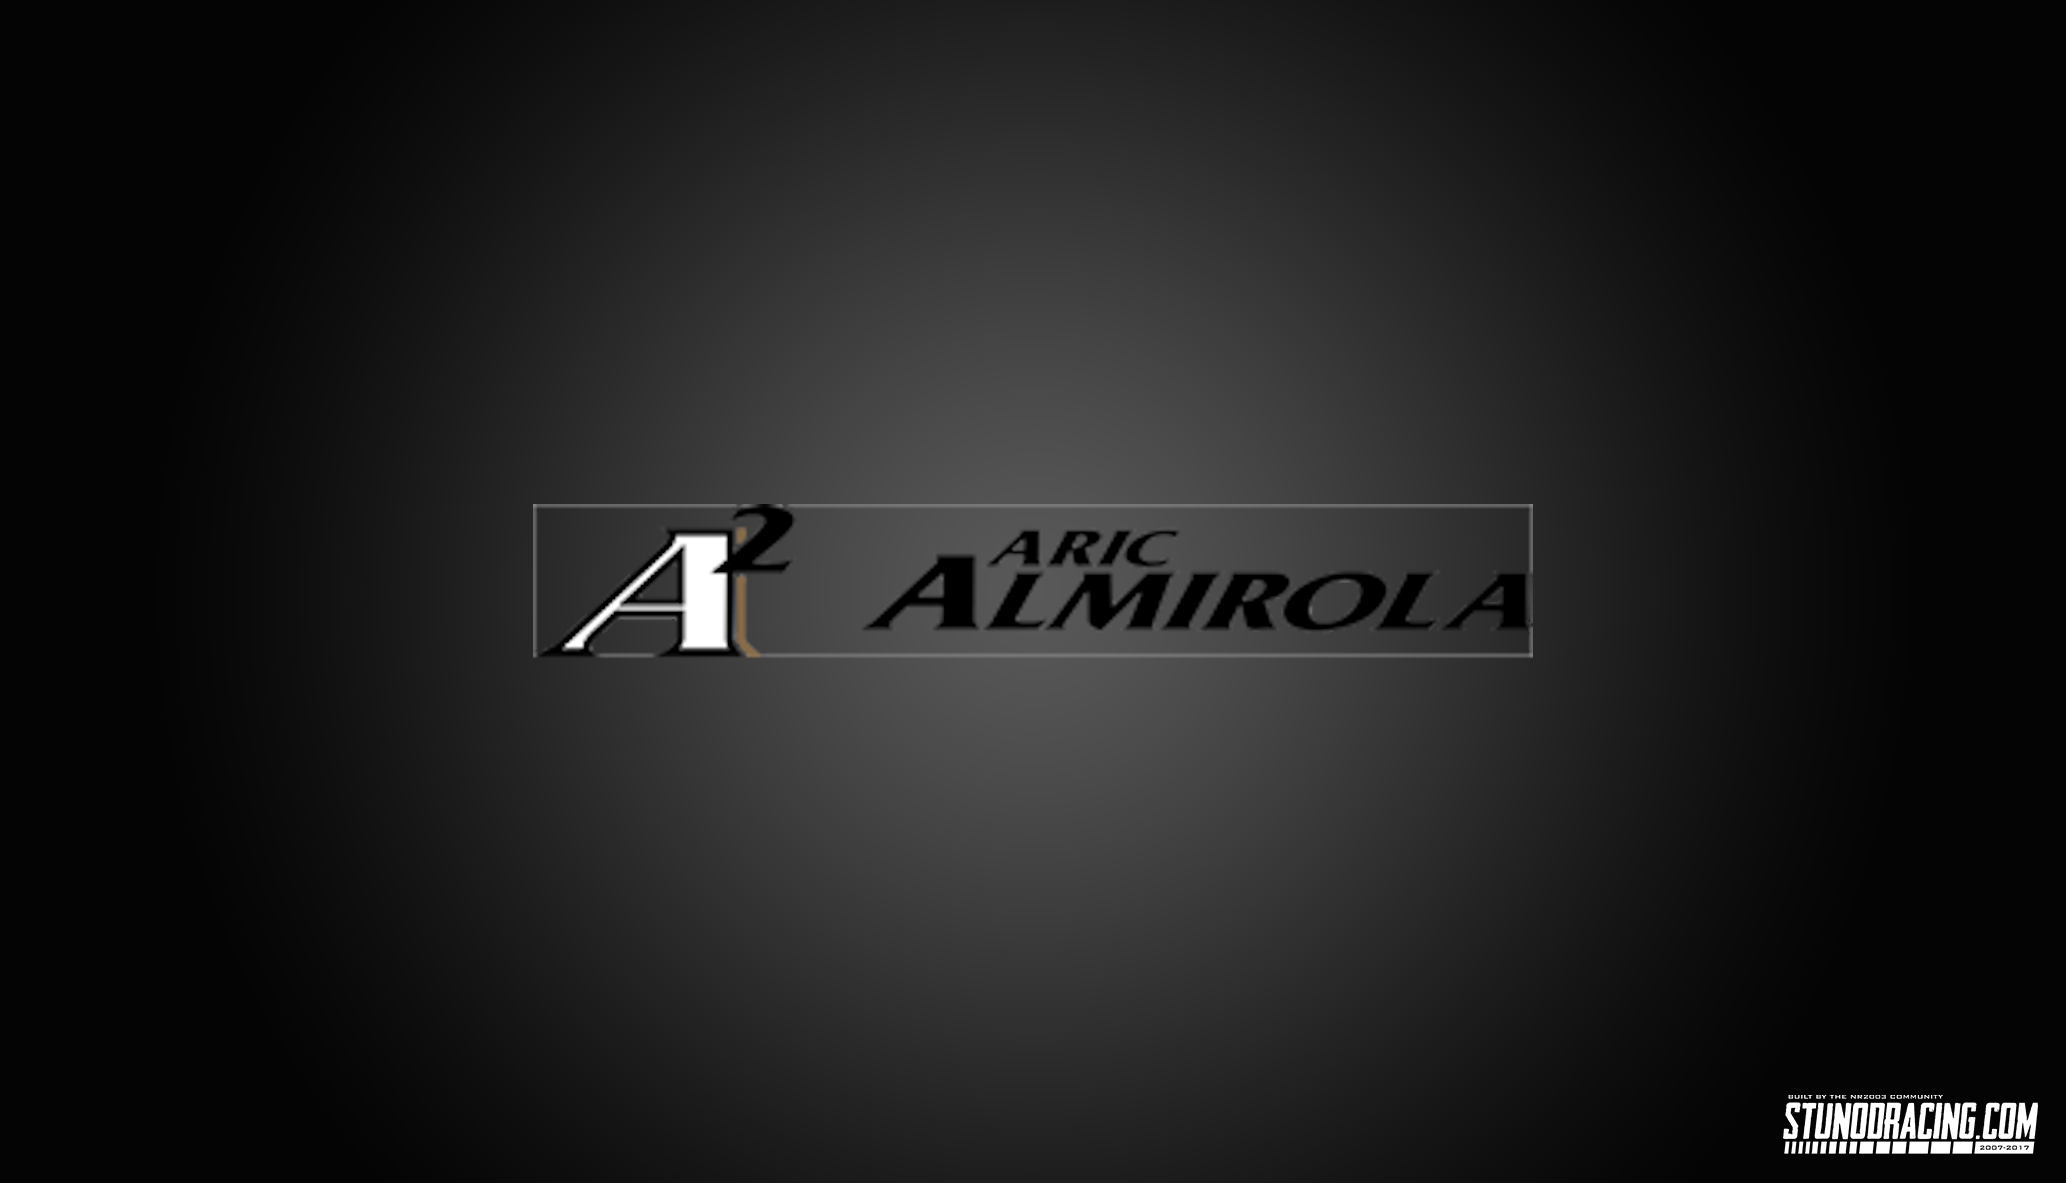 Aric Almorola driver signiture.png